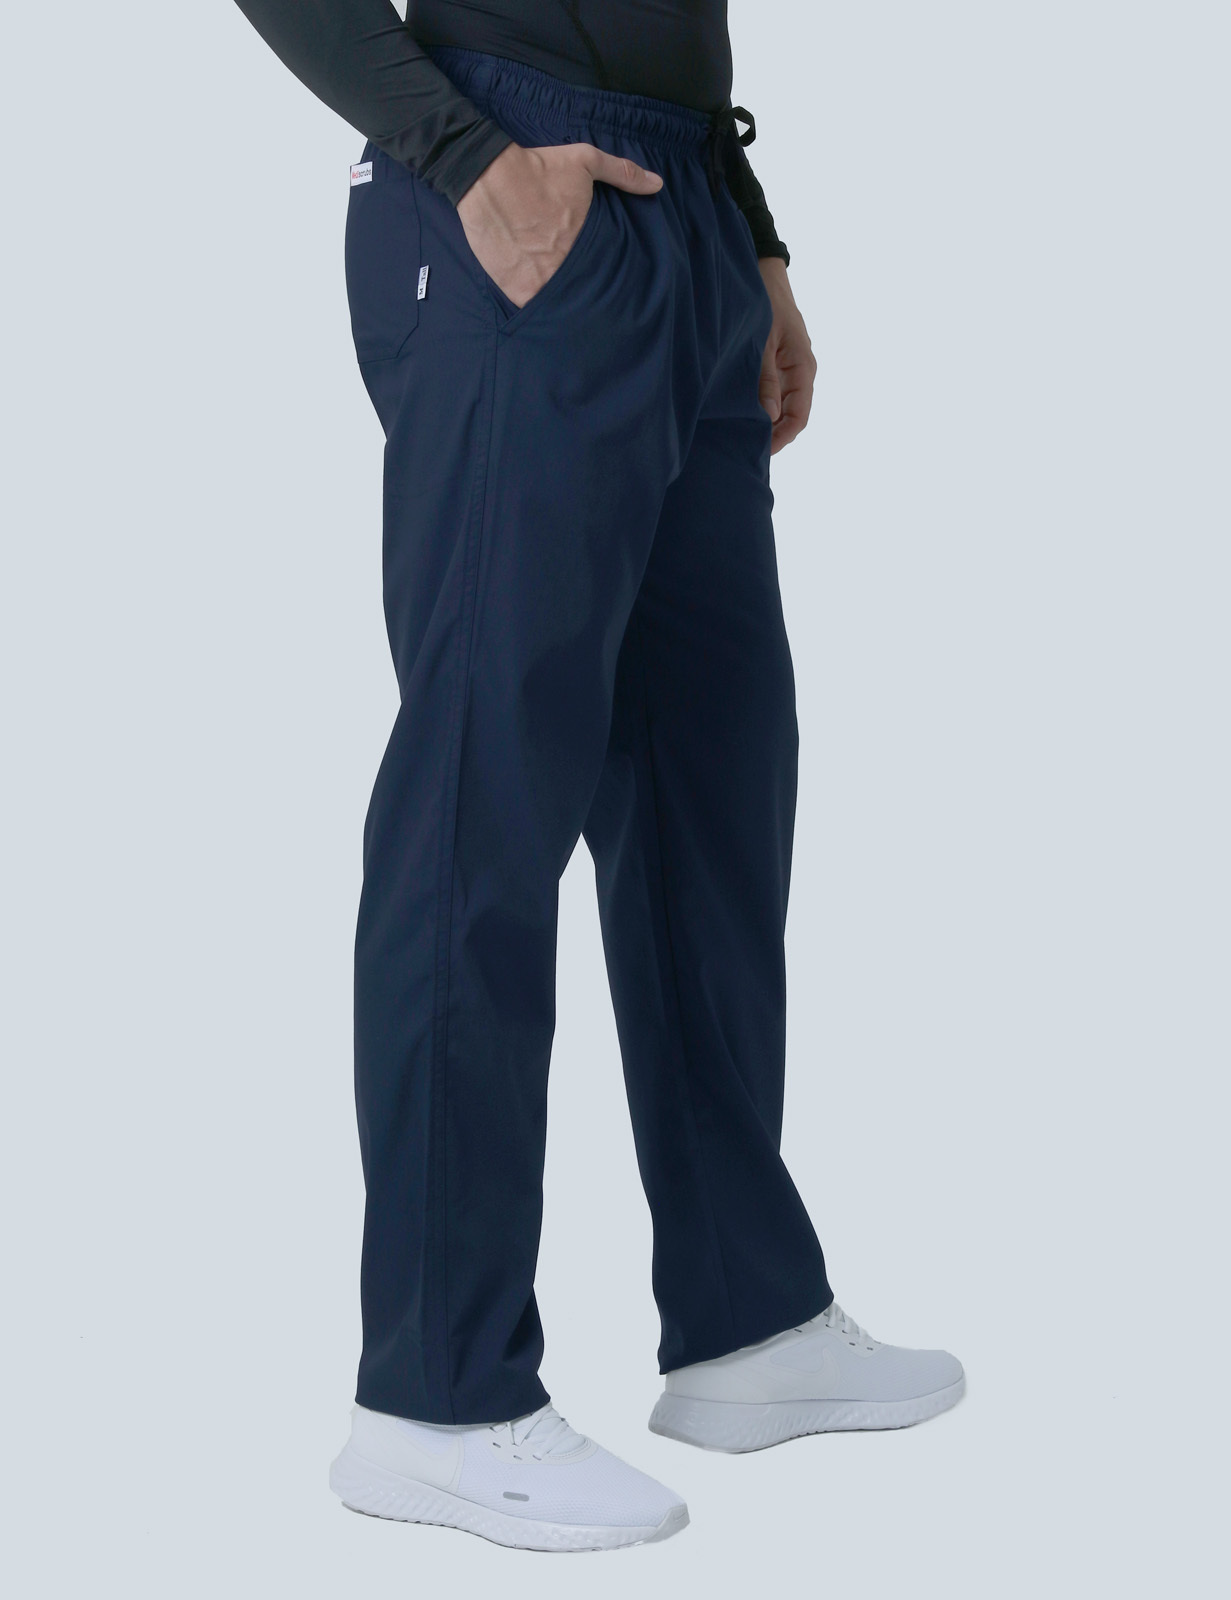 Men's Regular Cut Pants - Navy - Large